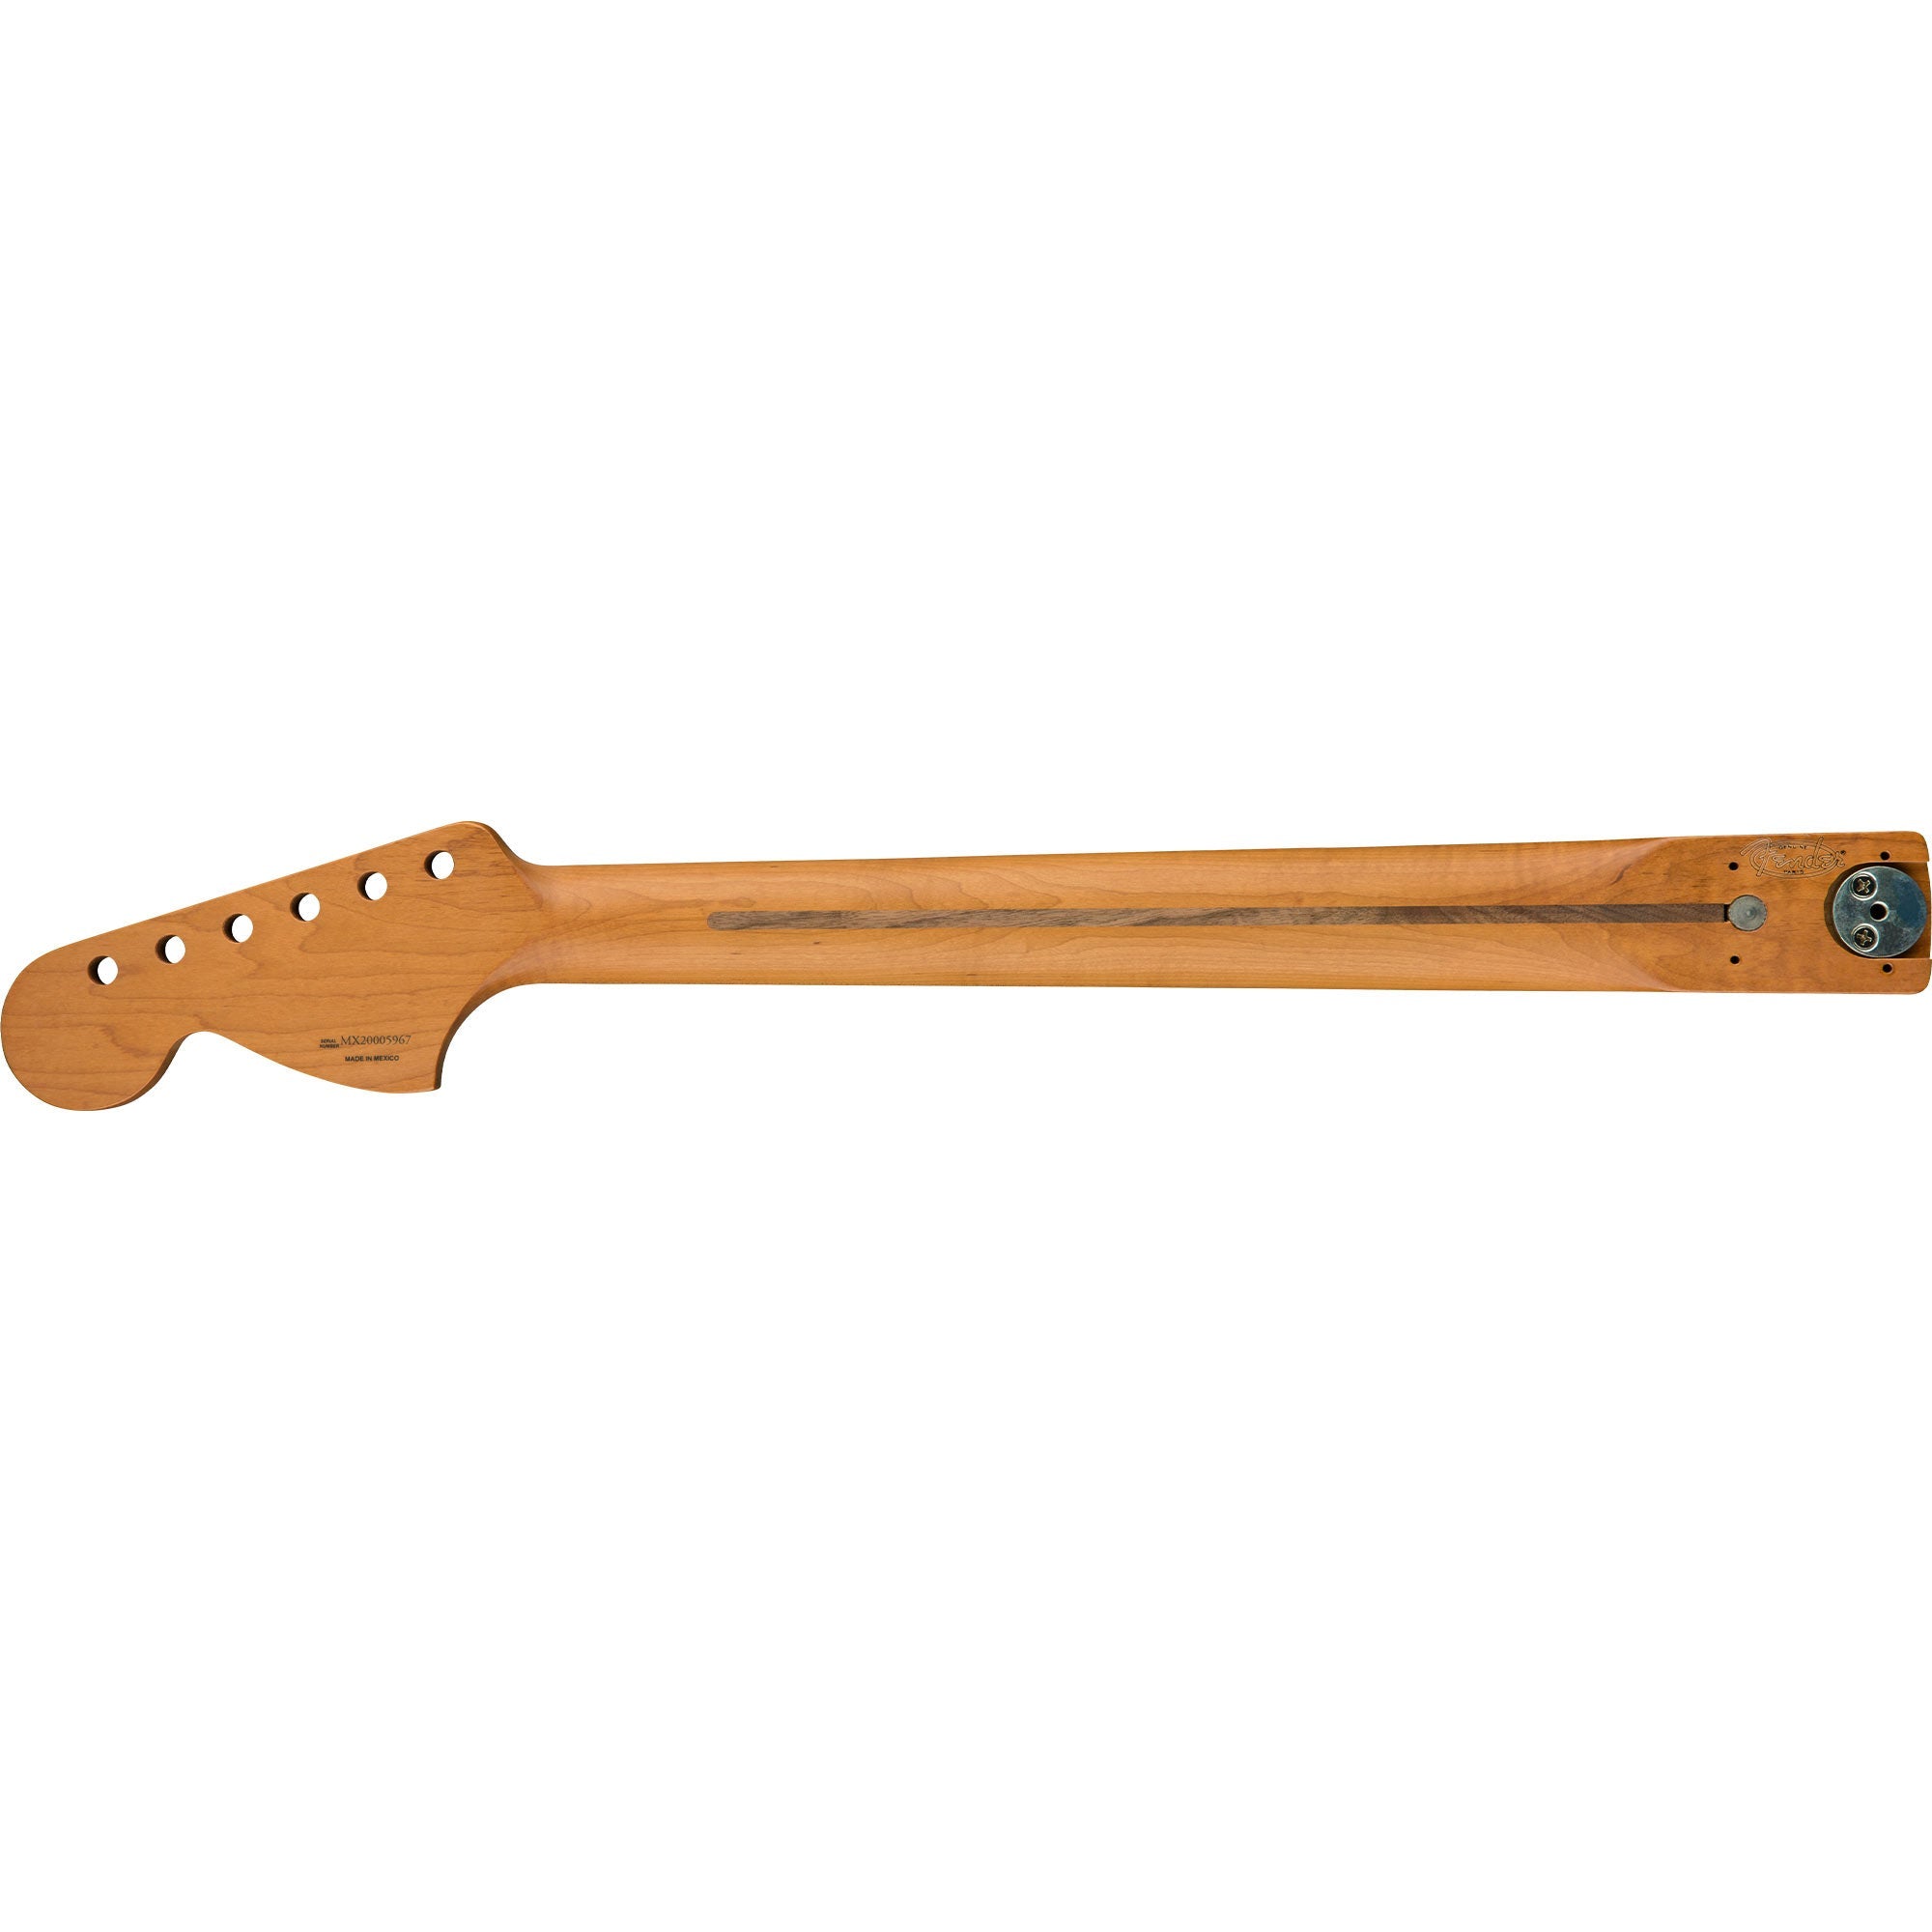 Fender Roasted Maple Vintera Mod '70s Stratocaster Neck | The 